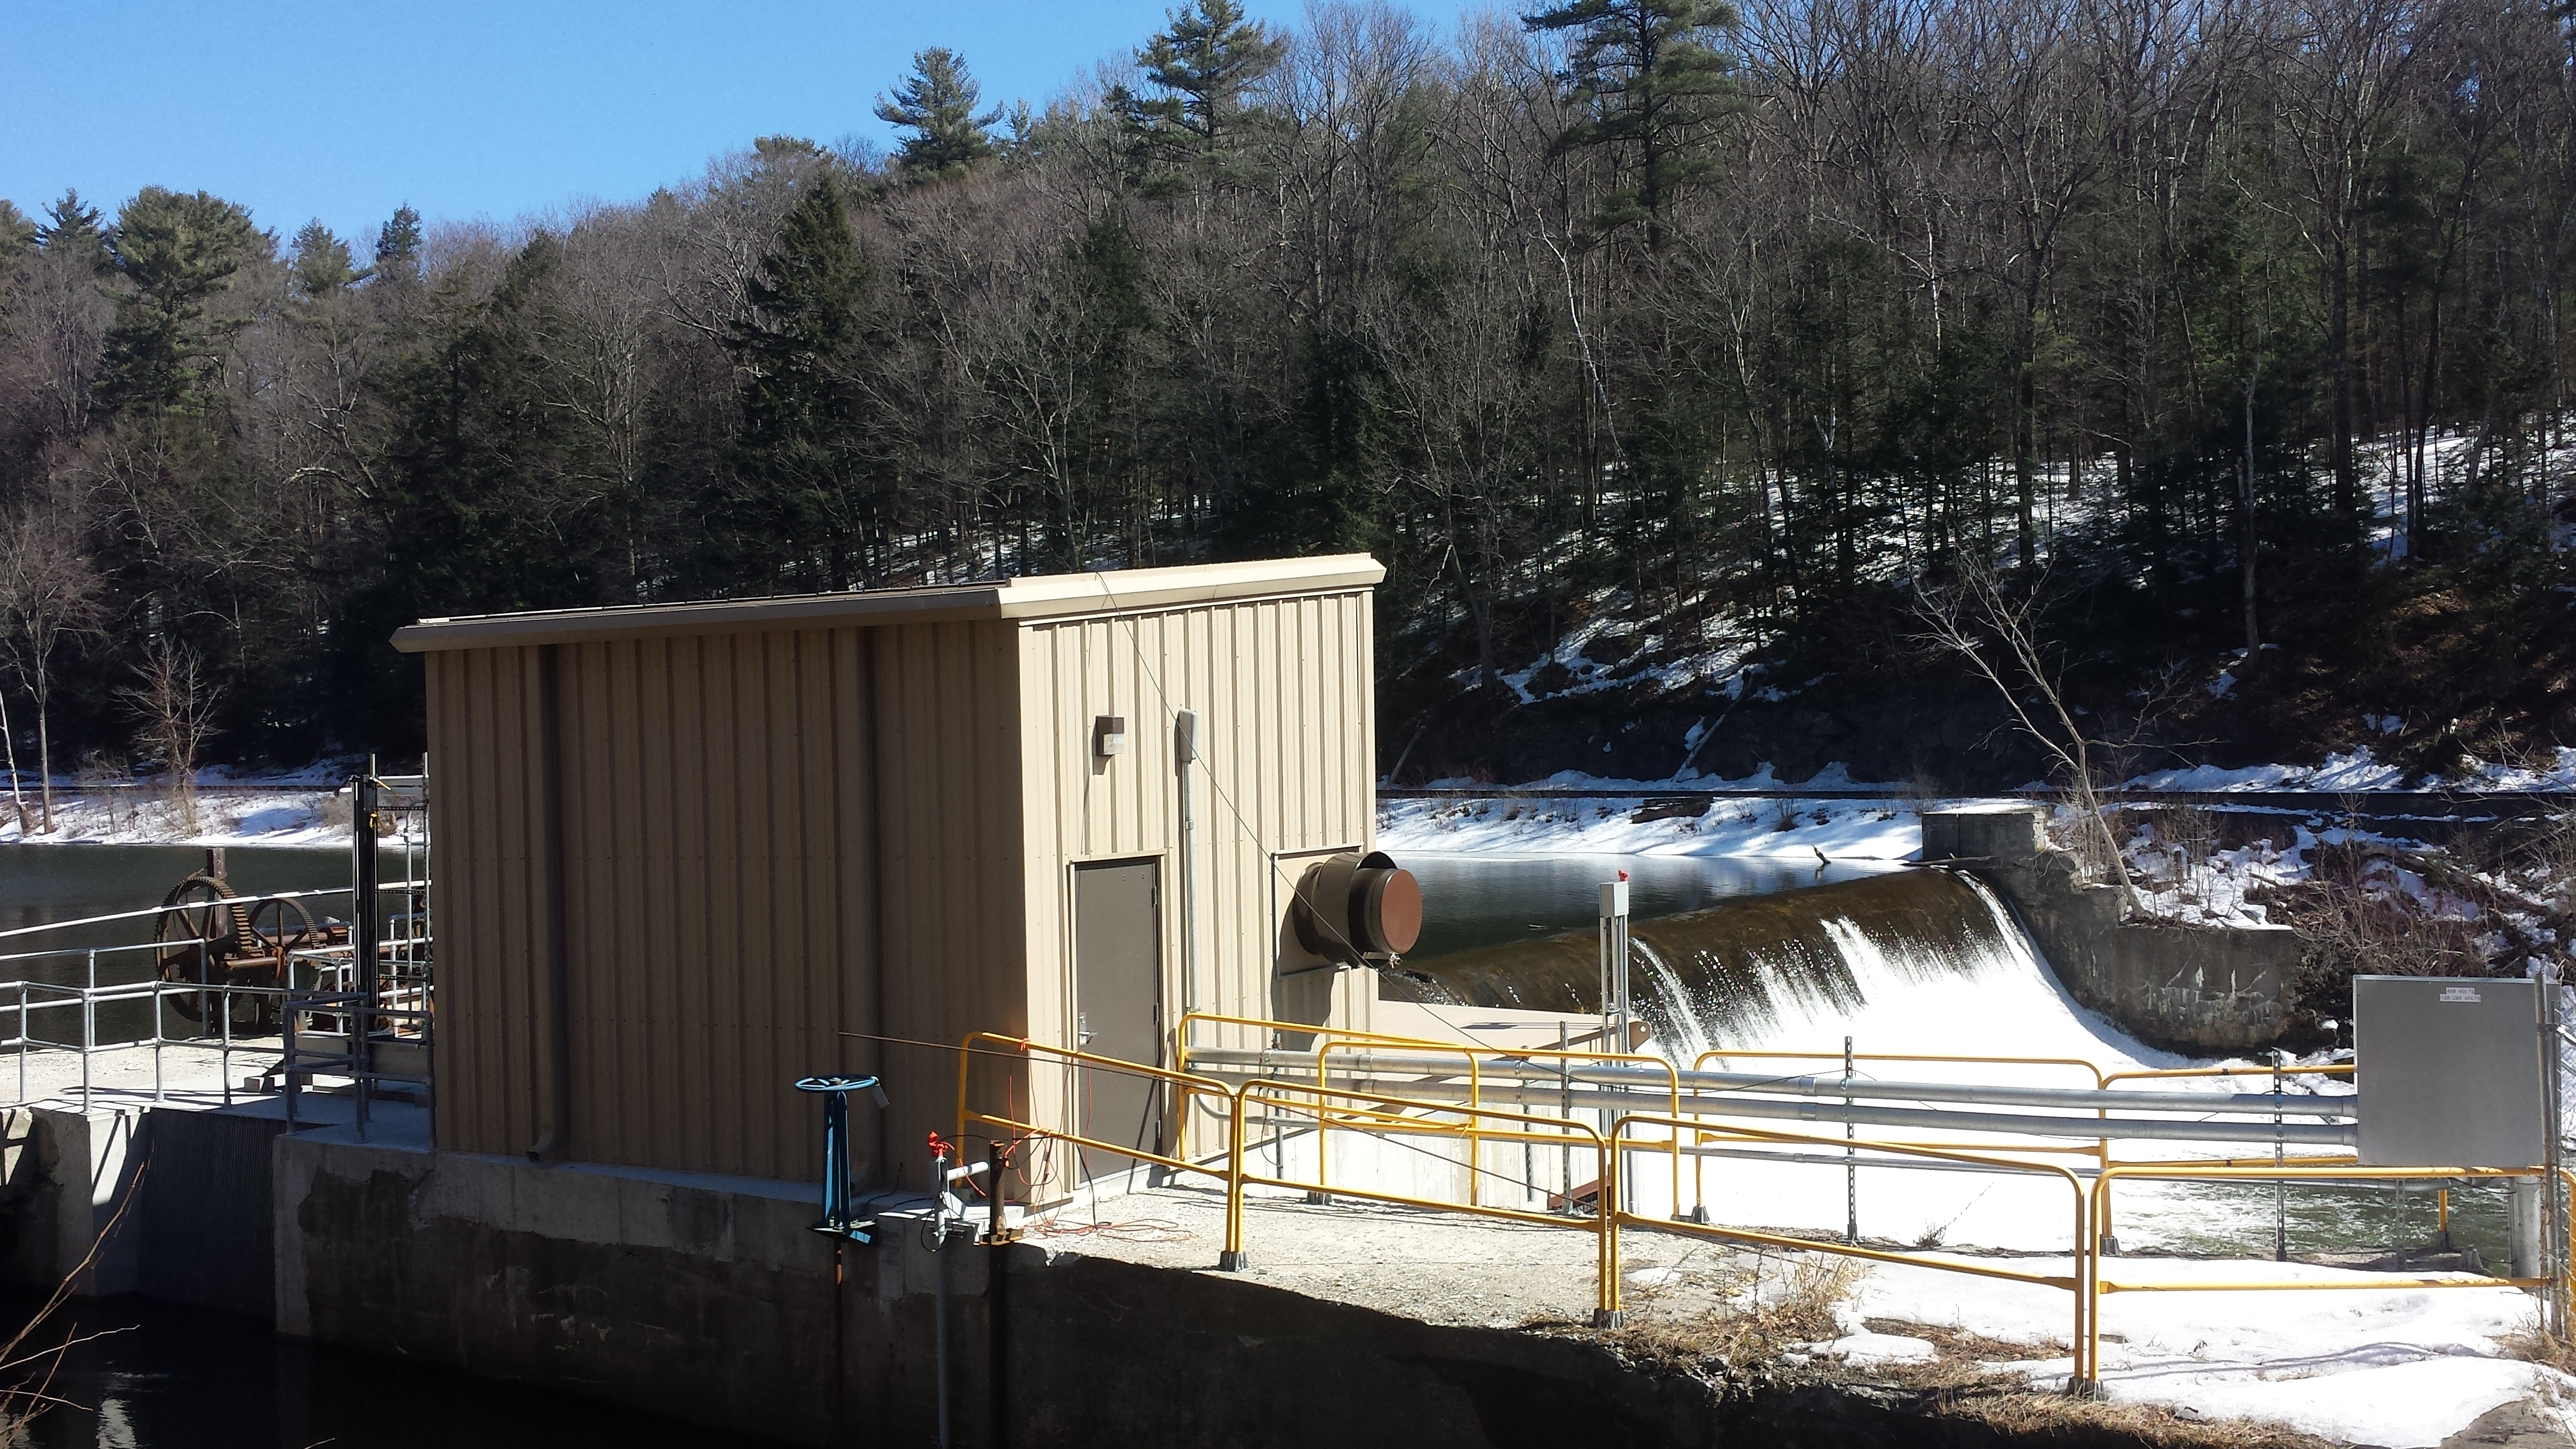 Hydro powerhouse and dam